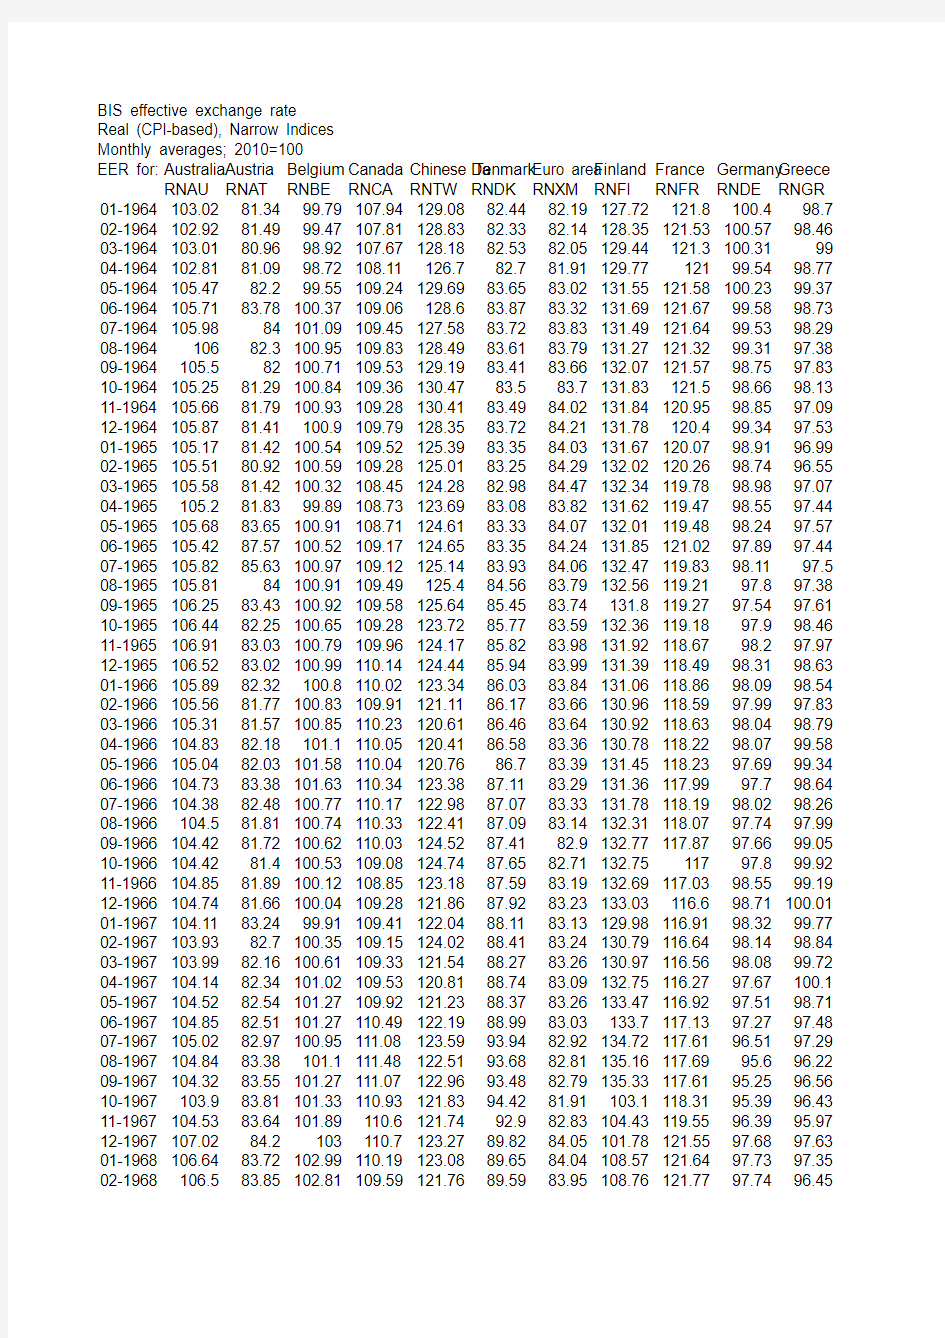 BIS中国及各国月度实际有效汇率1964-2013